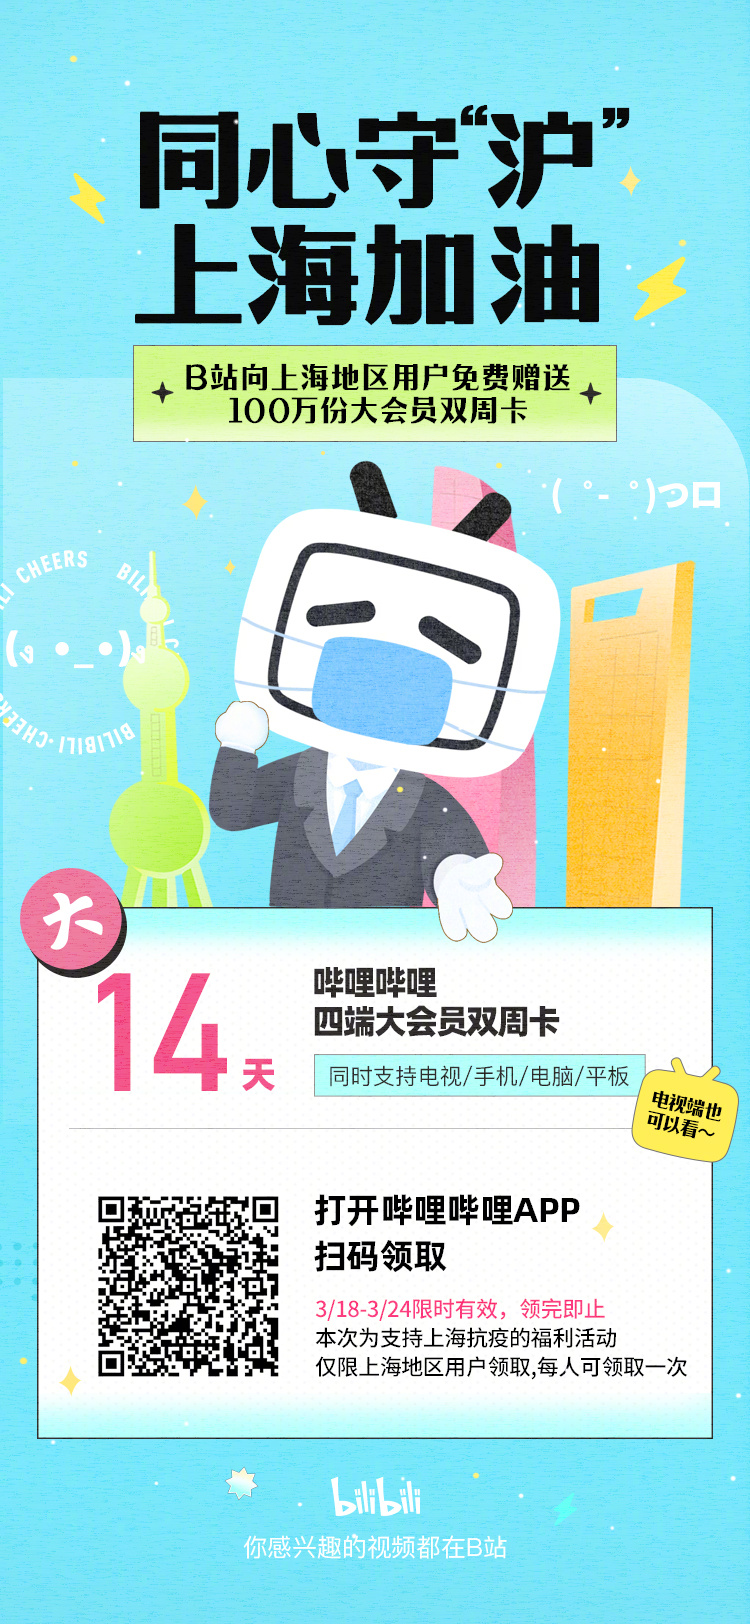 B站给上海用户免费发放100万份四端大会员双周卡 可享受专属内容和清晰度